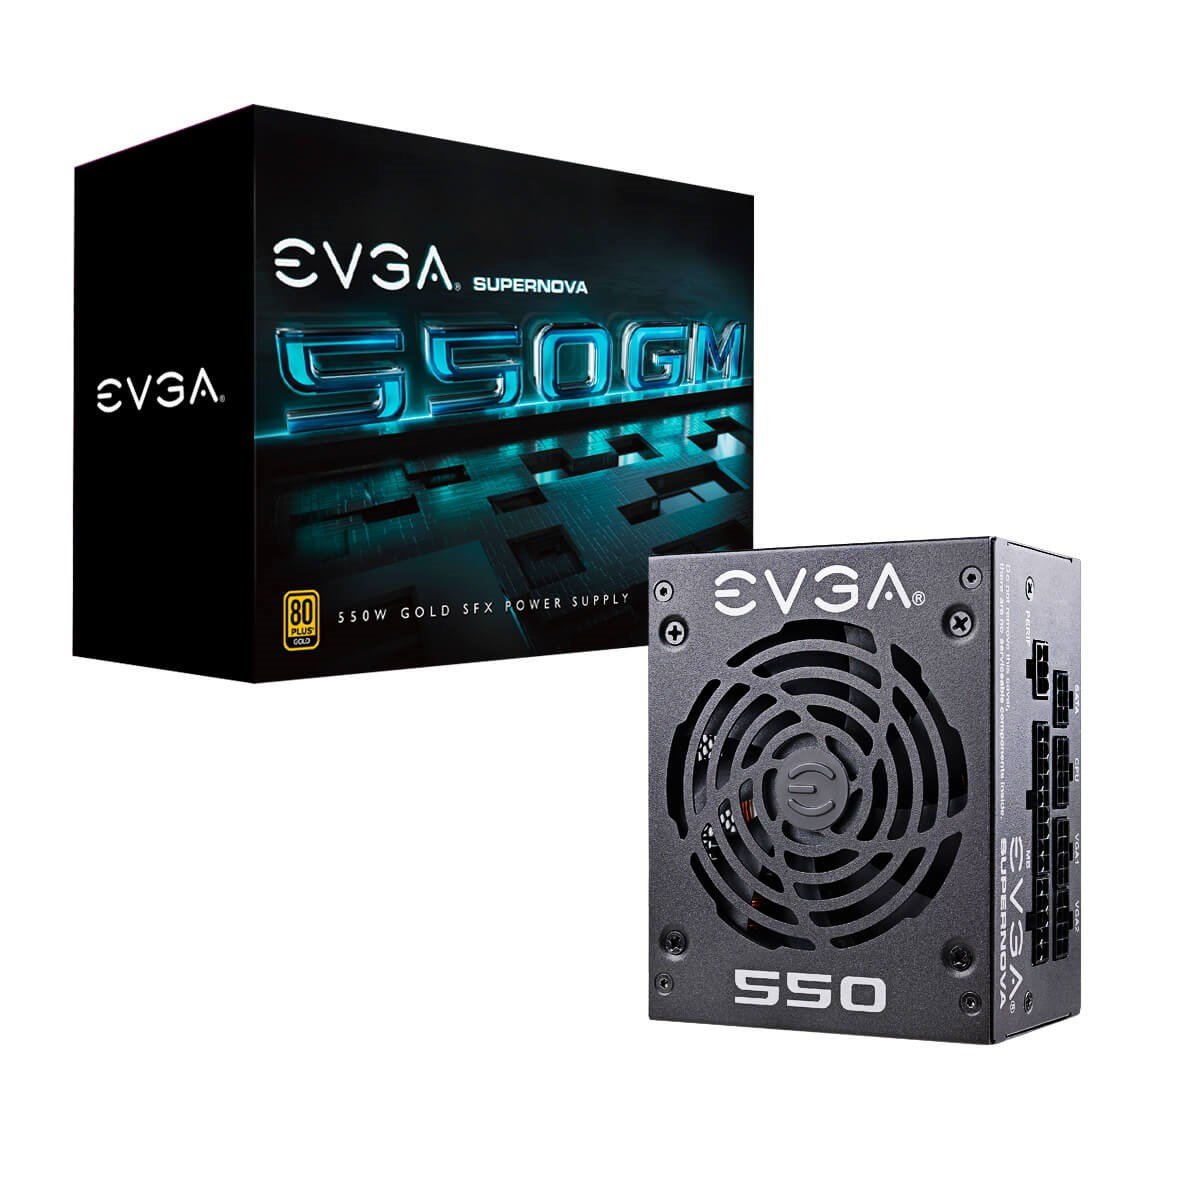 EVGA SFX Power Supply SuperNOVA 550 GM, 80 Plus Gold 550W, Fully Modular. $65